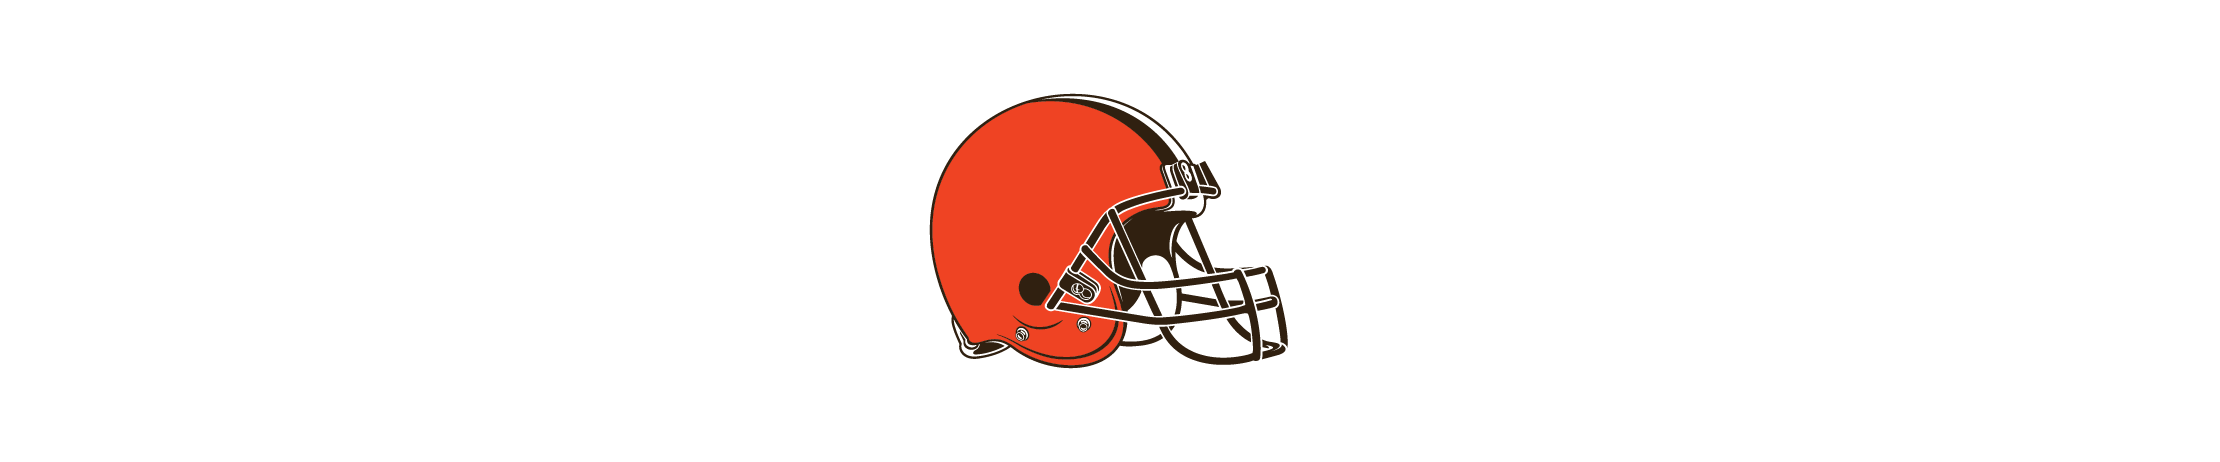 Cleveland Browns Small Zip Crossbody - Dooney & Bourke - Everything Buckeyes